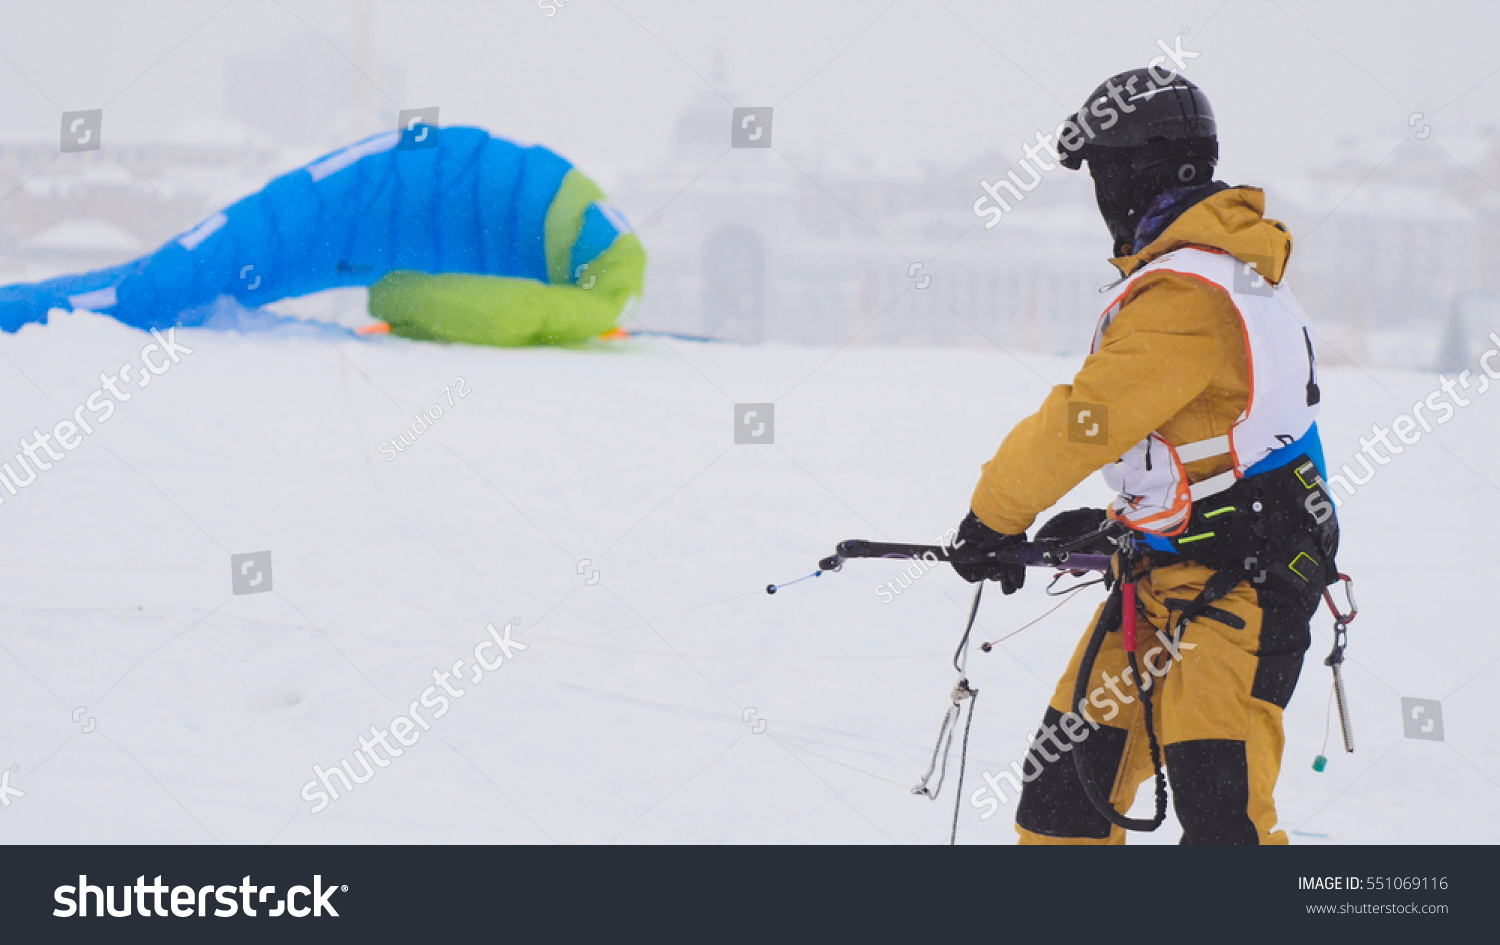 Snowkiting in the snow on frozen river, kite surfer ready for sliding #551069116